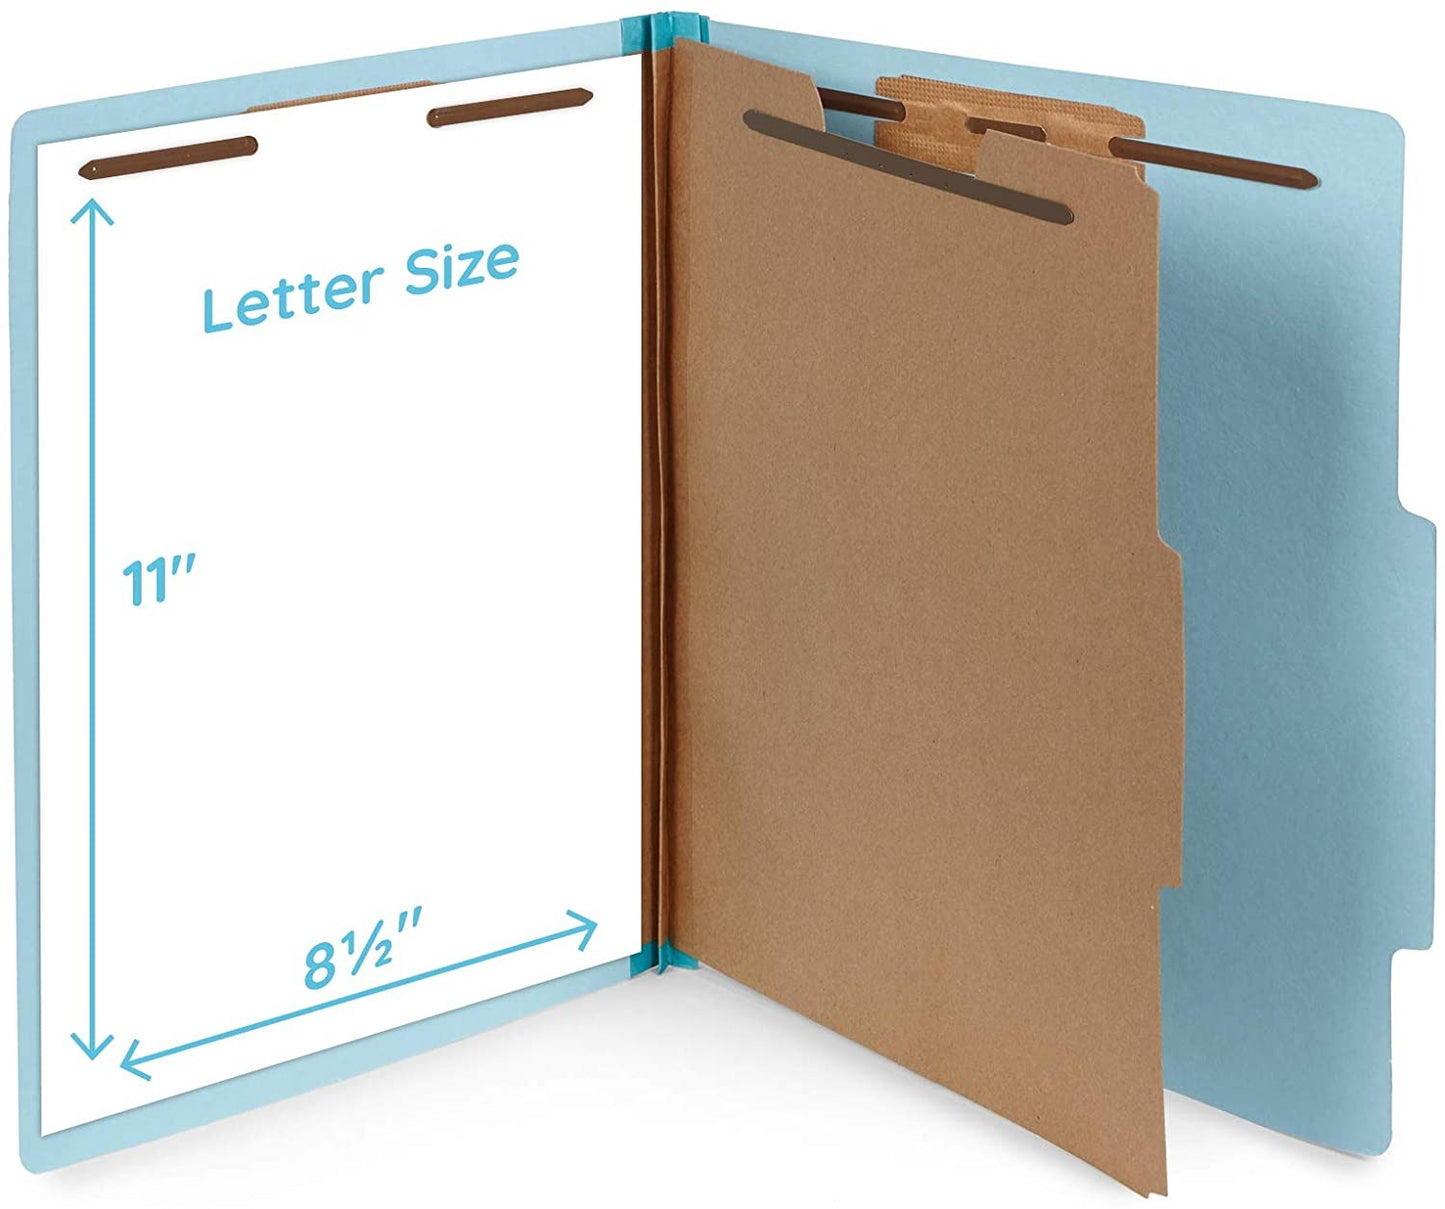 10 Blue Classification Folders Designed to Organize Standard Files